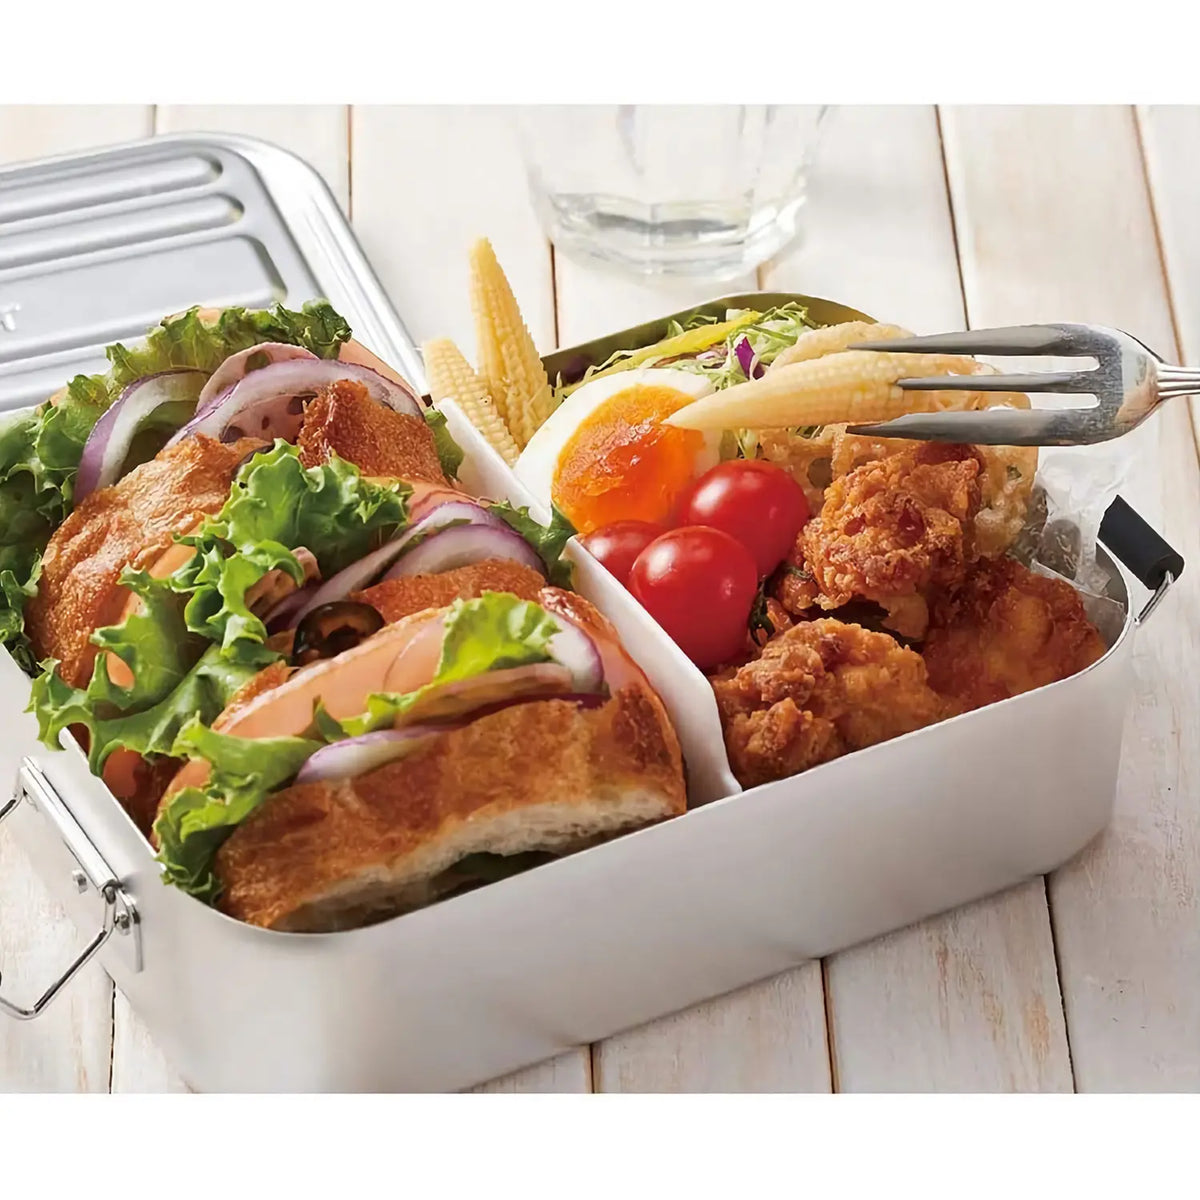 Lunch 4 Japanese Disposable Bento Box - China Take Away Food